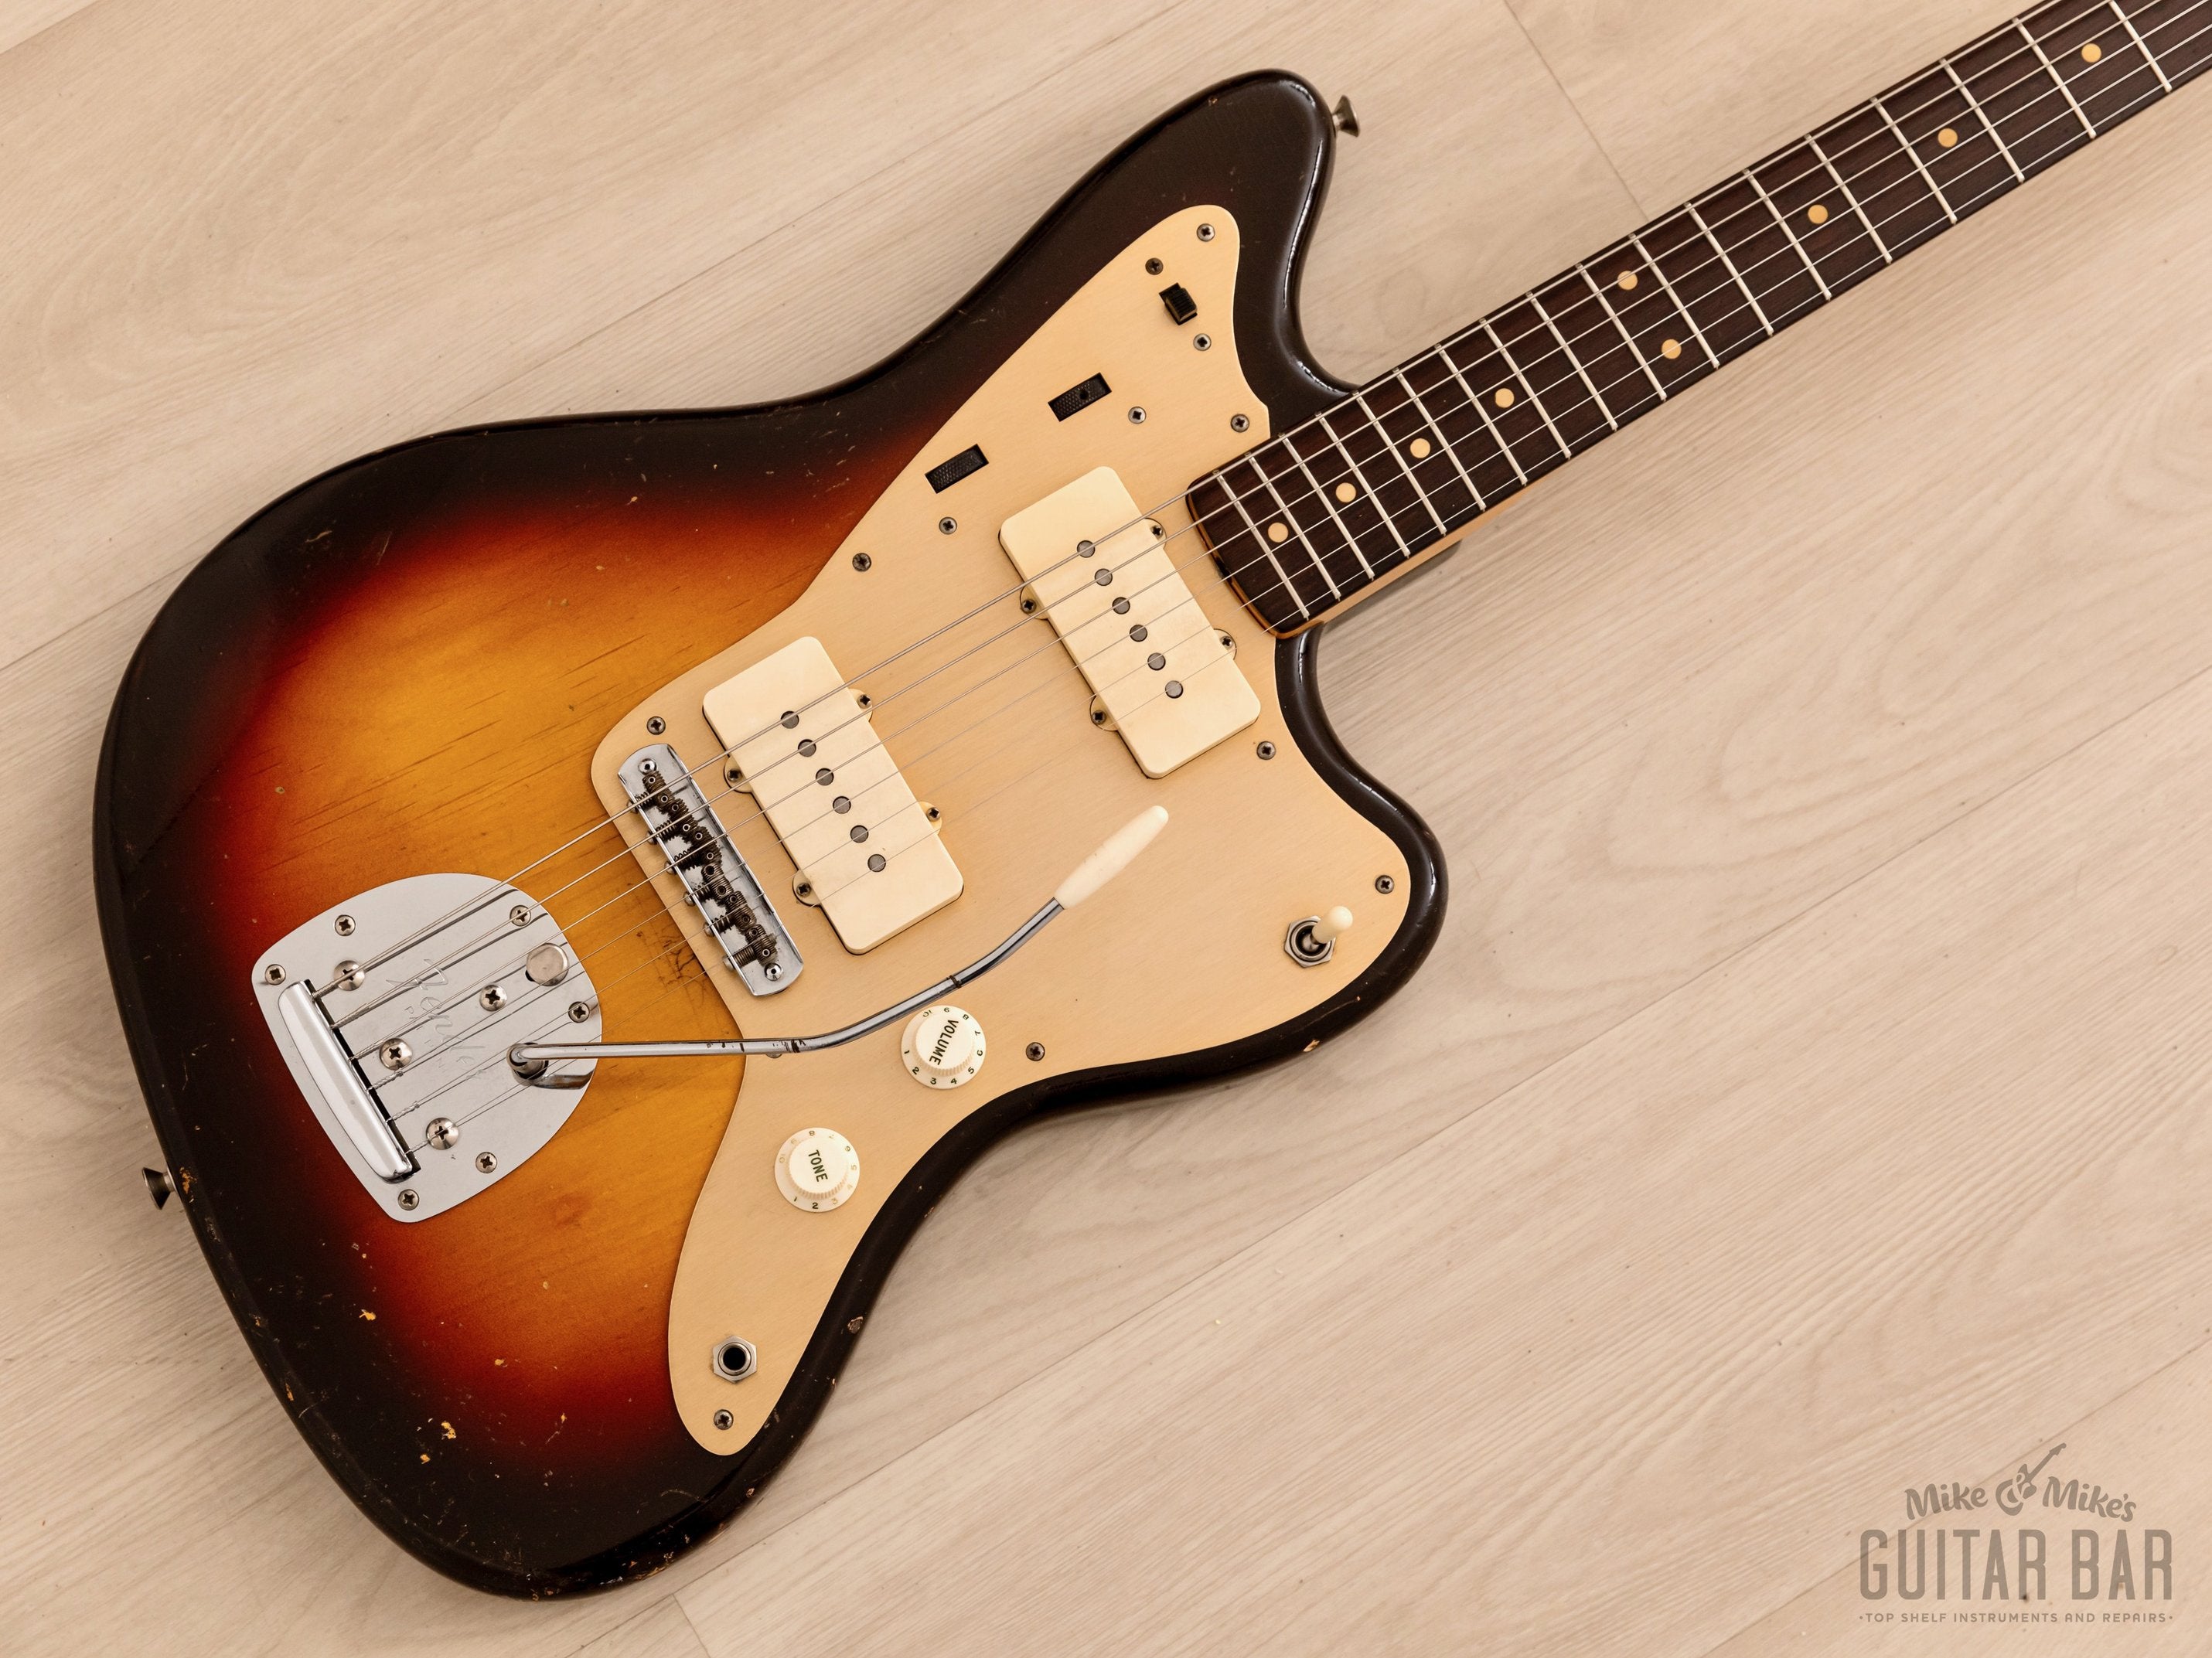 1959 Fender Jazzmaster Vintage Offset Guitar Sunburst w/ Tweed Case, Ed King-Owned (Lynyrd Skynyrd)